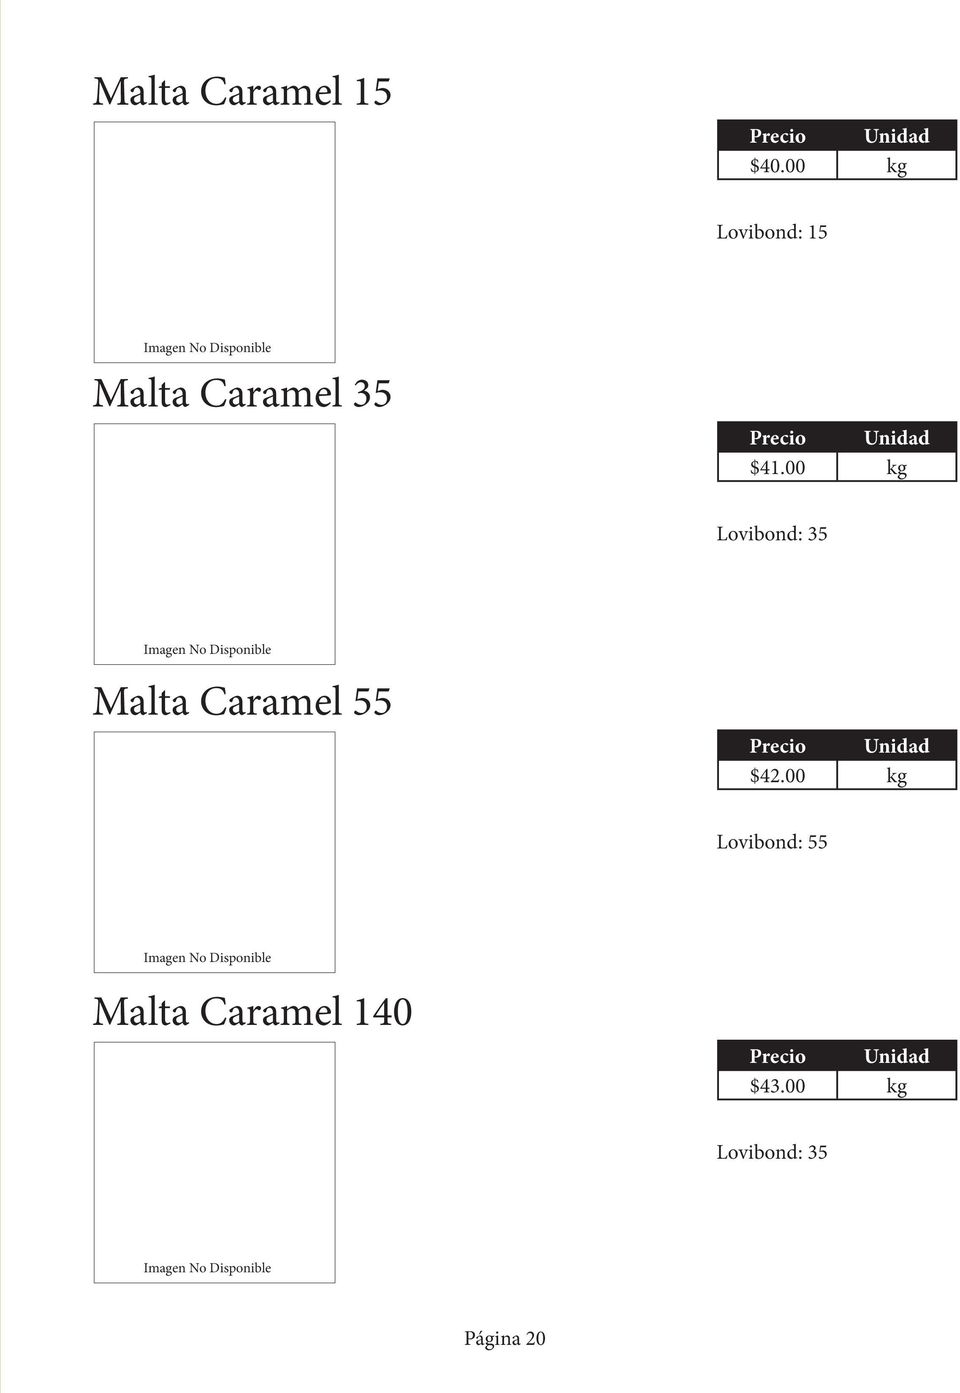 00 kg Lovibond: 35 Malta Caramel 55 $42.